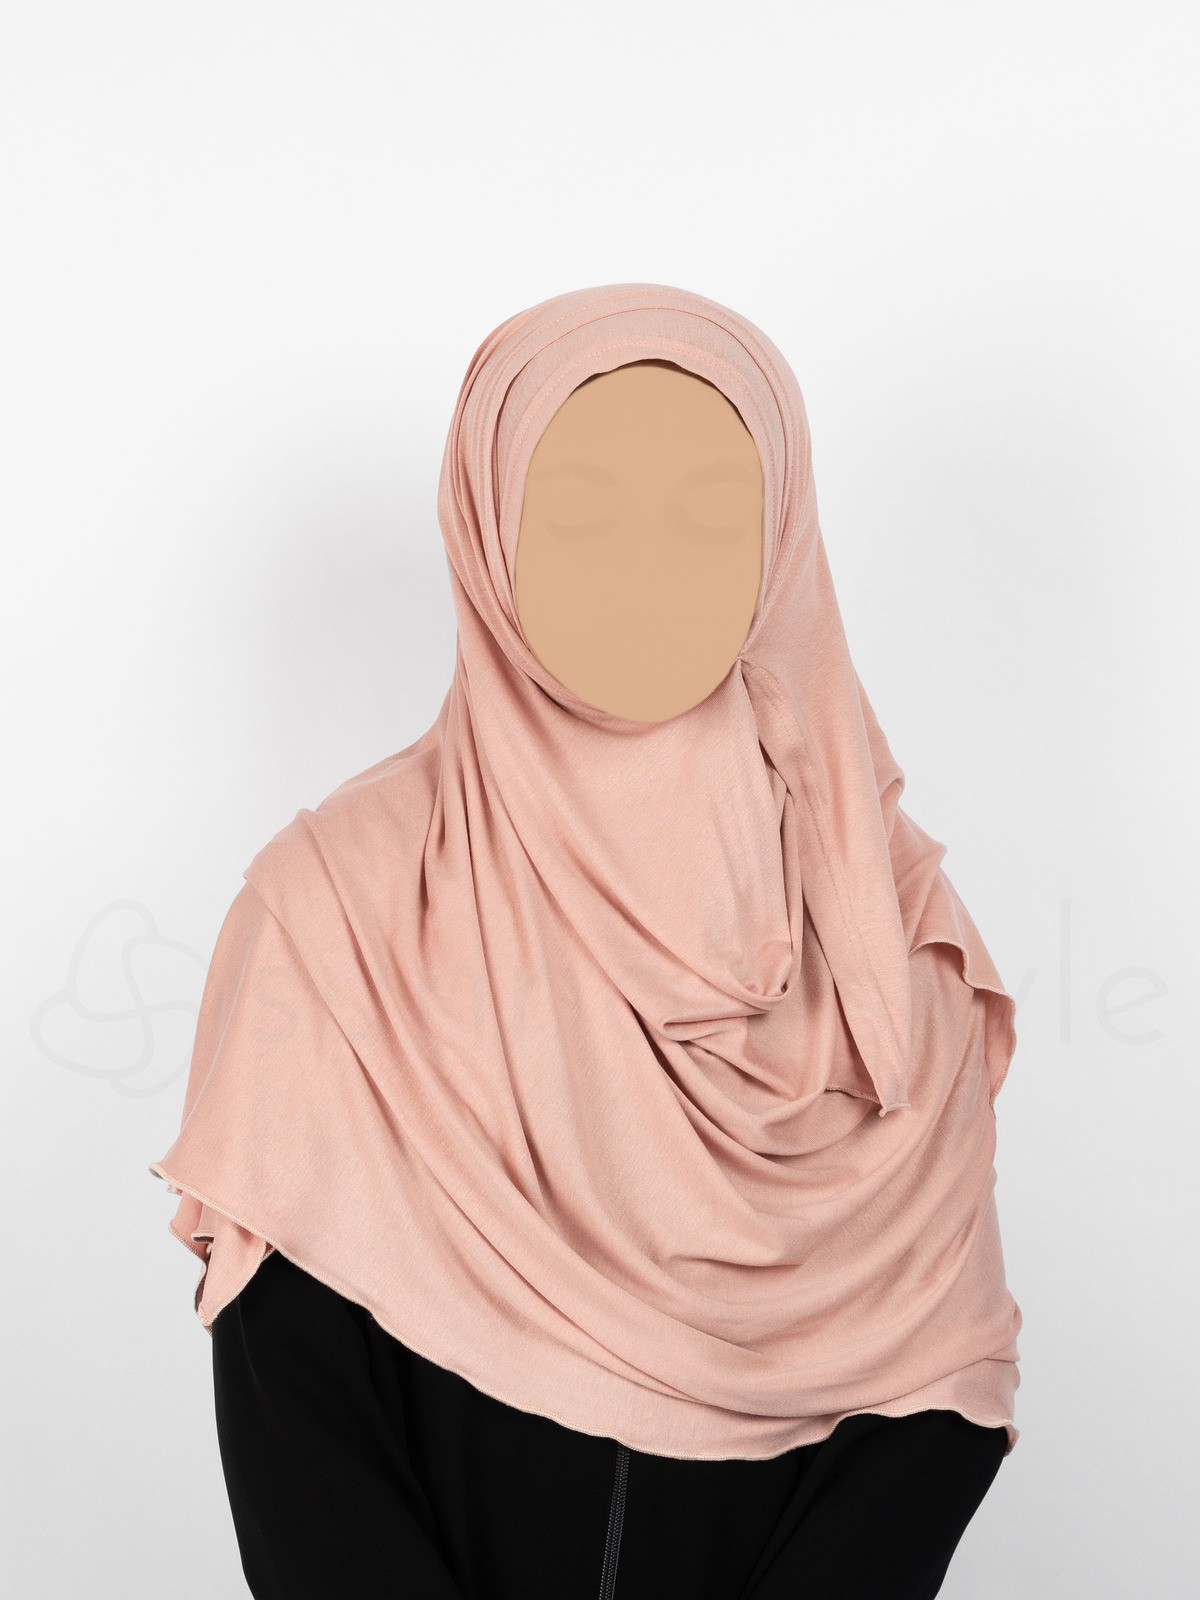 Sunnah Style - Girls Truss Hijab (Light Coral)